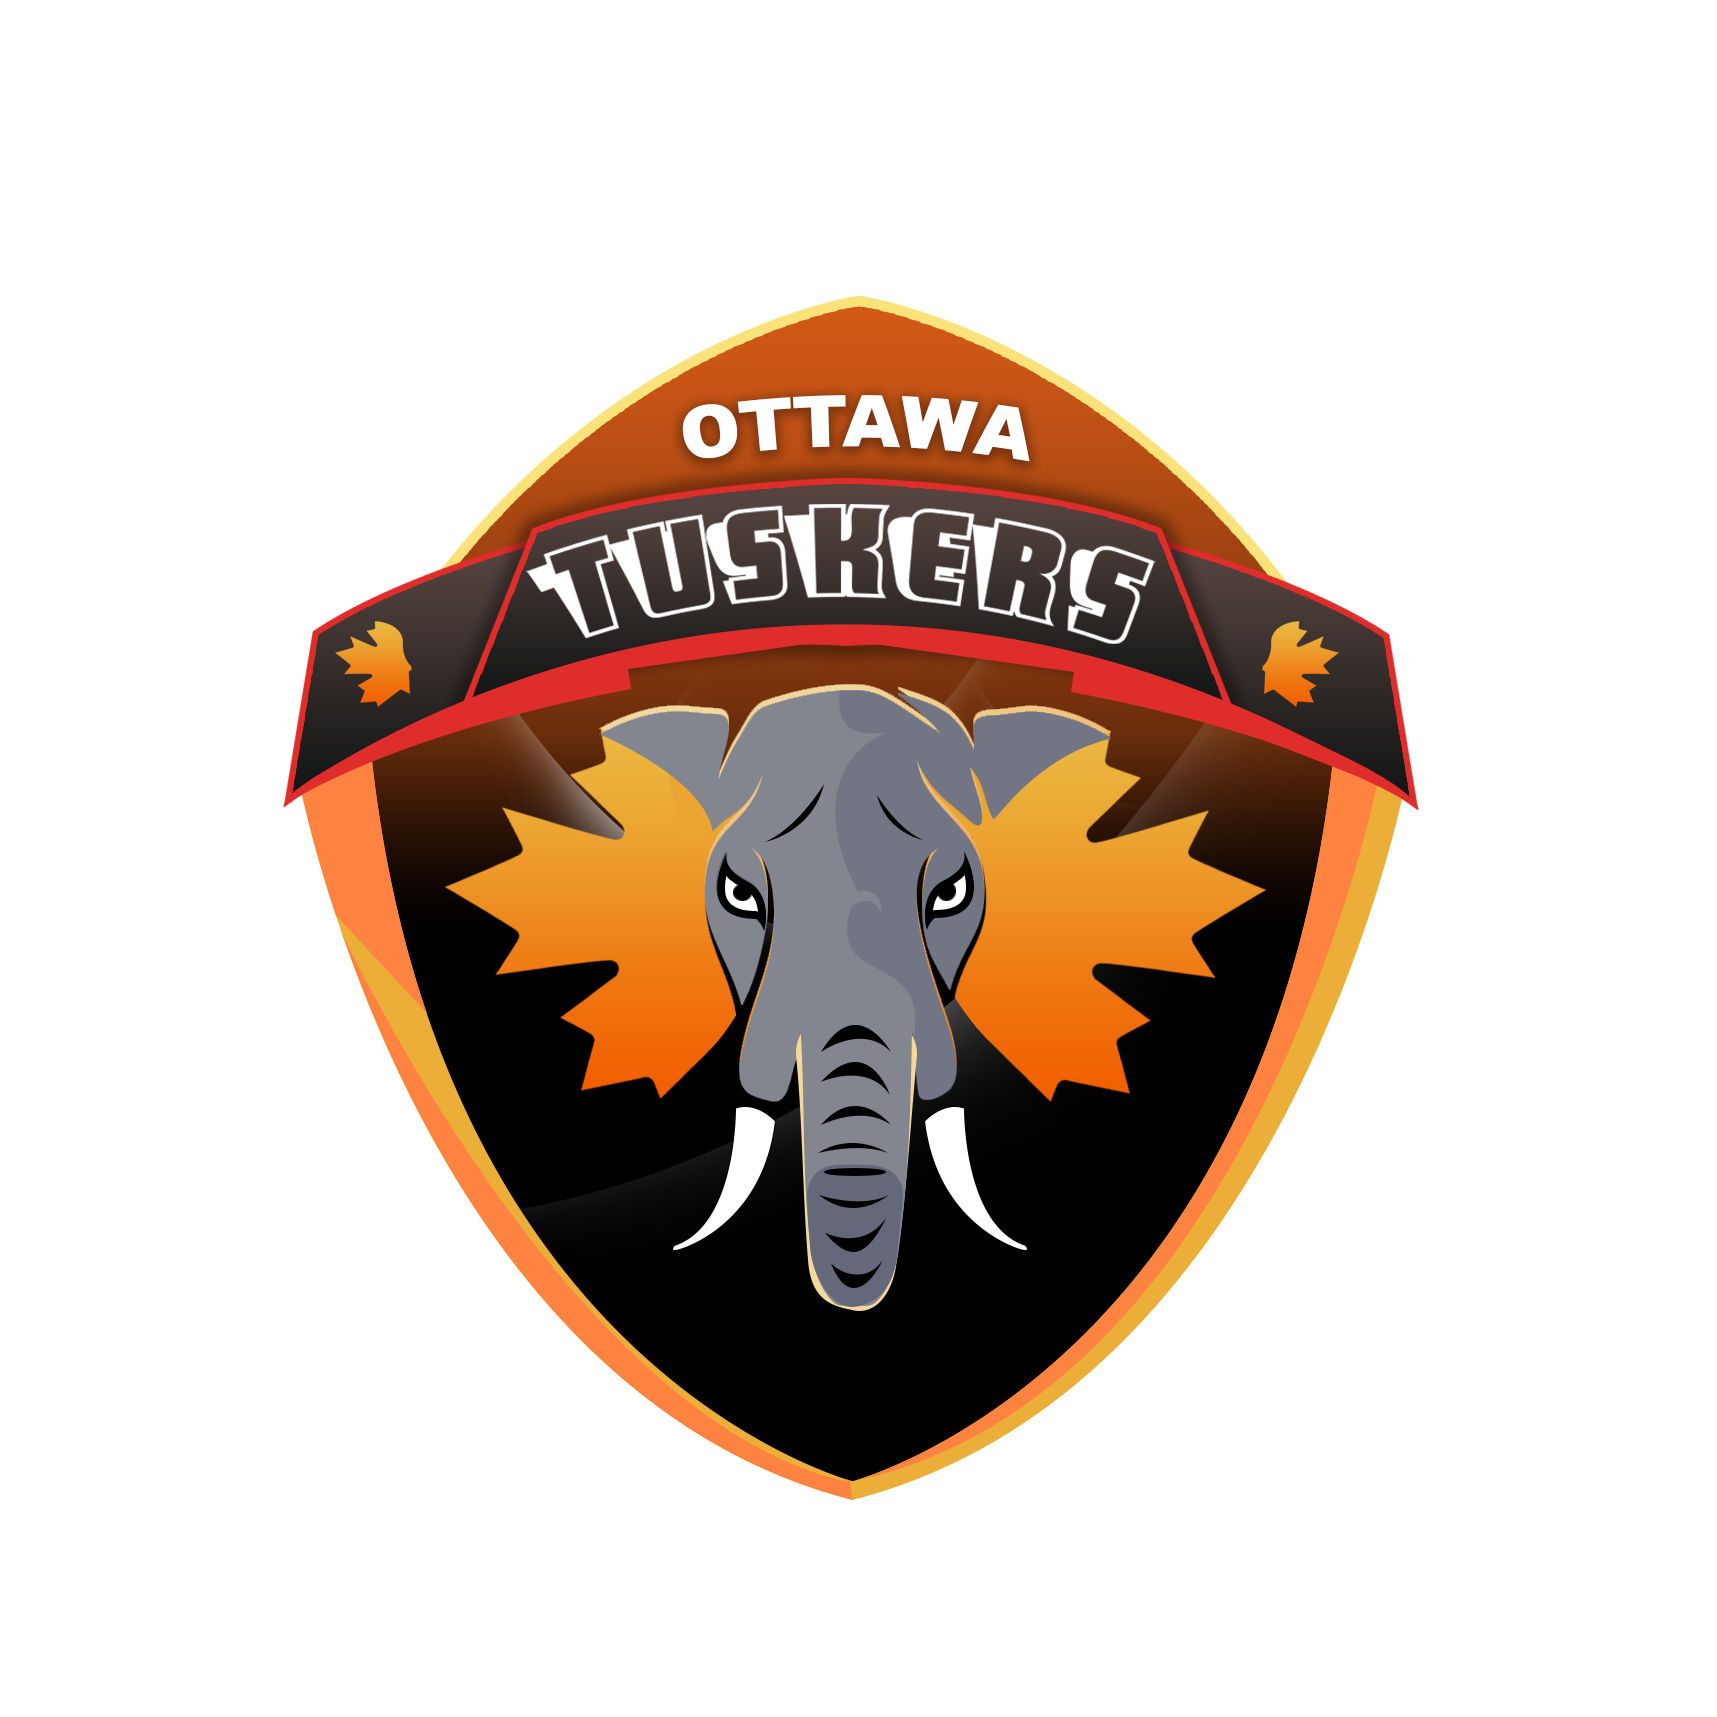 Ottawa tuskers